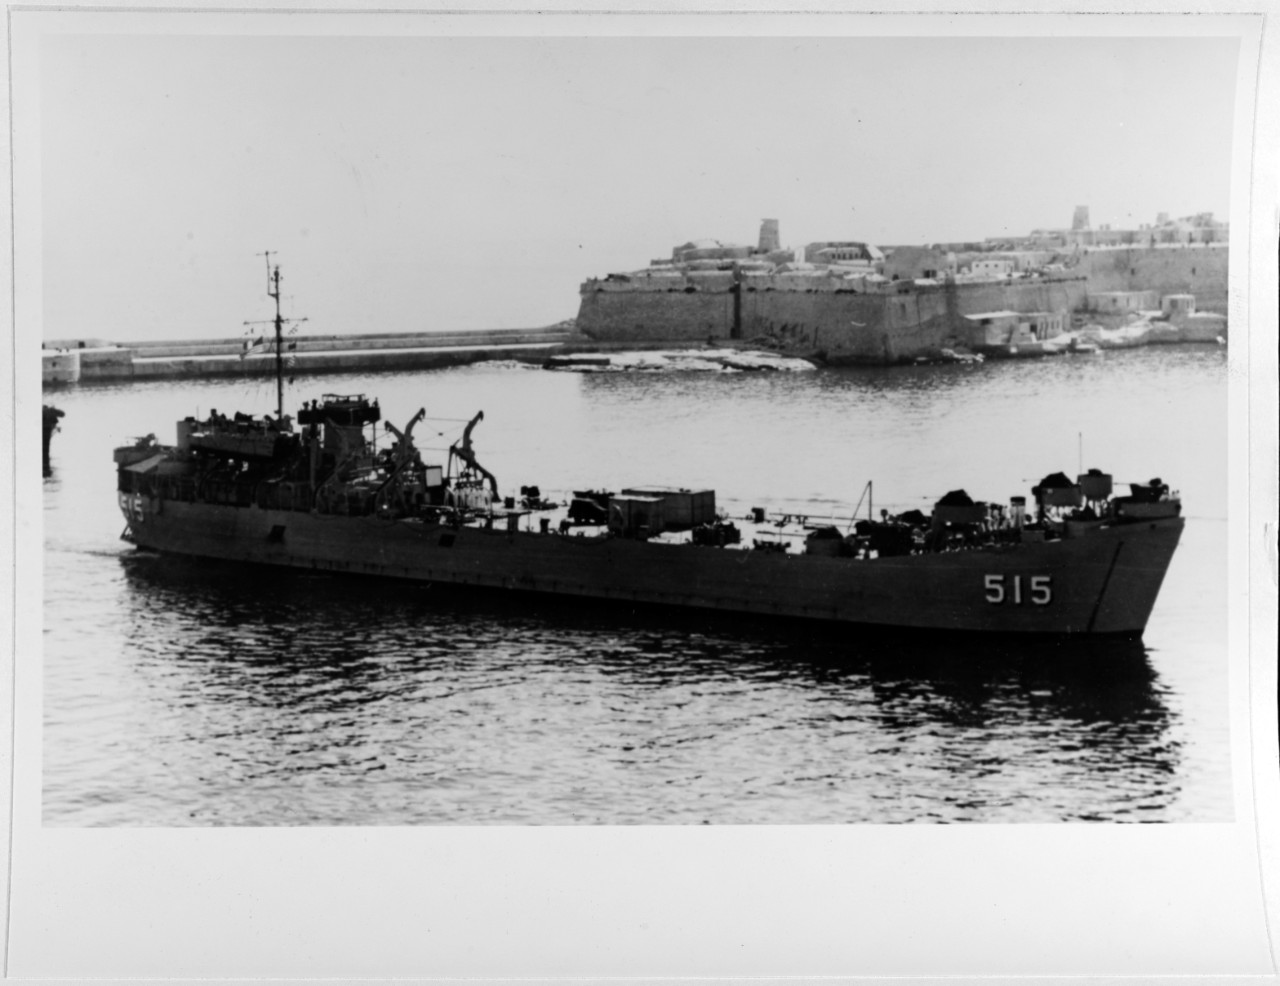 USS CADDO PARISH (LST-515)